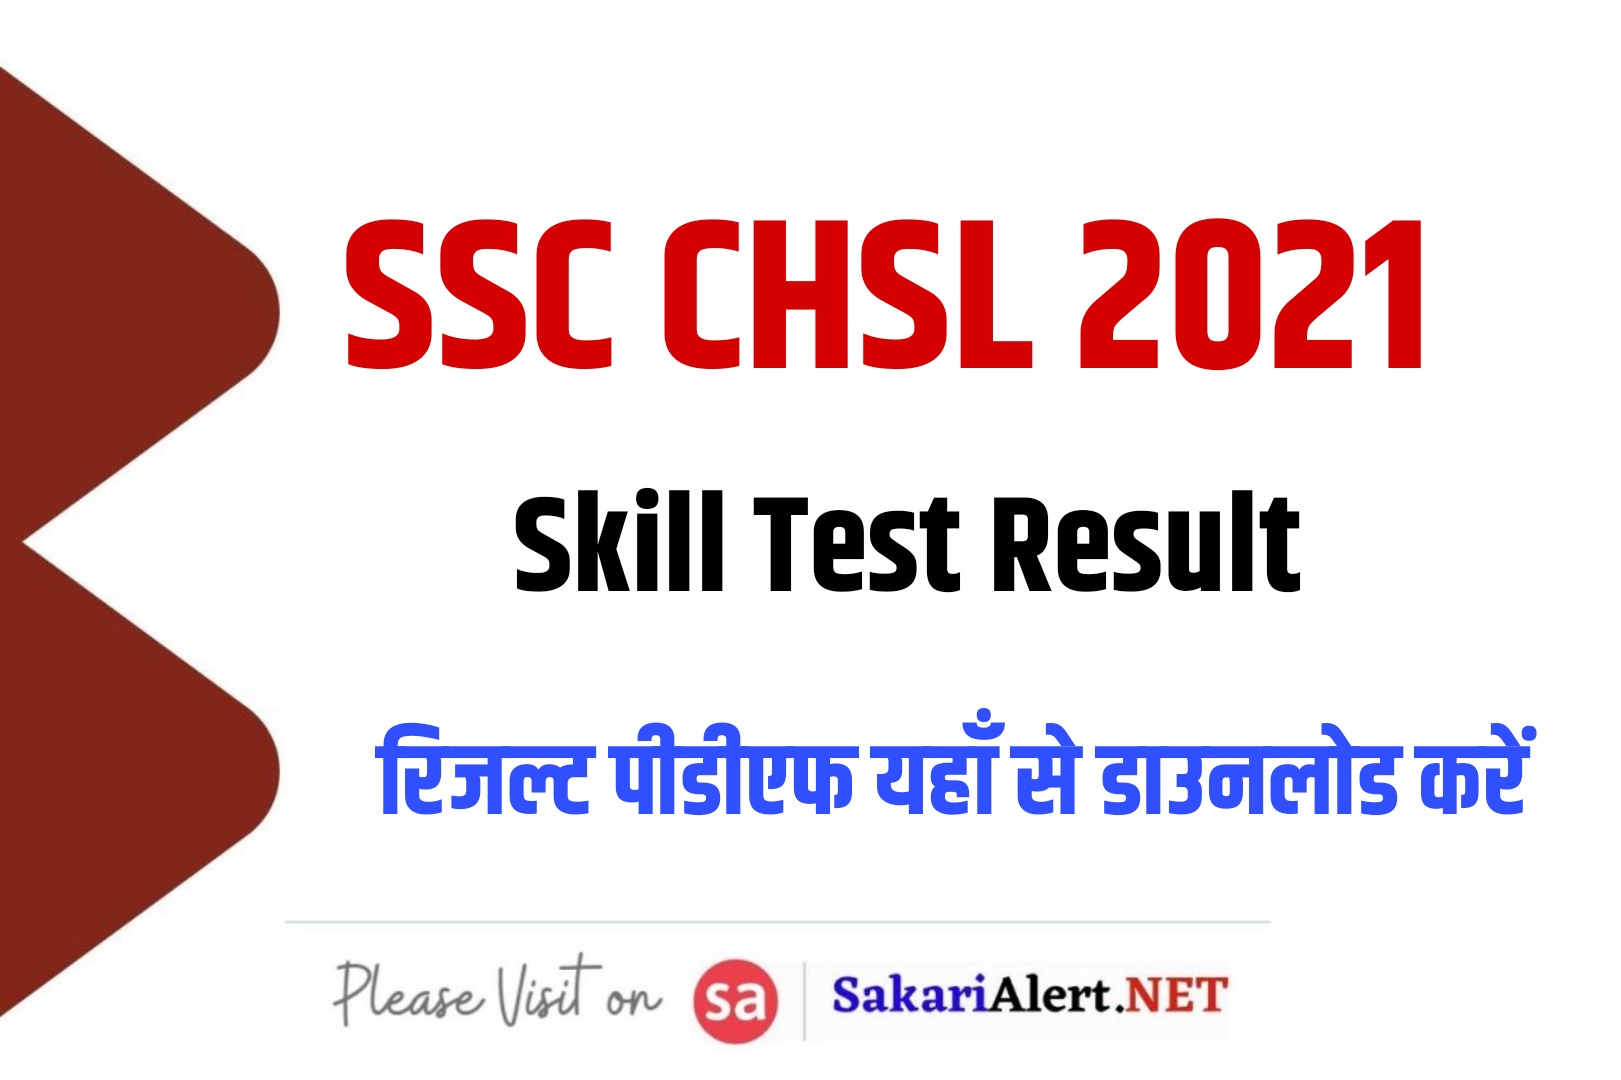 SSC CHSL 2021 Skill Test Result | एसएससी CHSL स्किल टेस्ट रिजल्ट